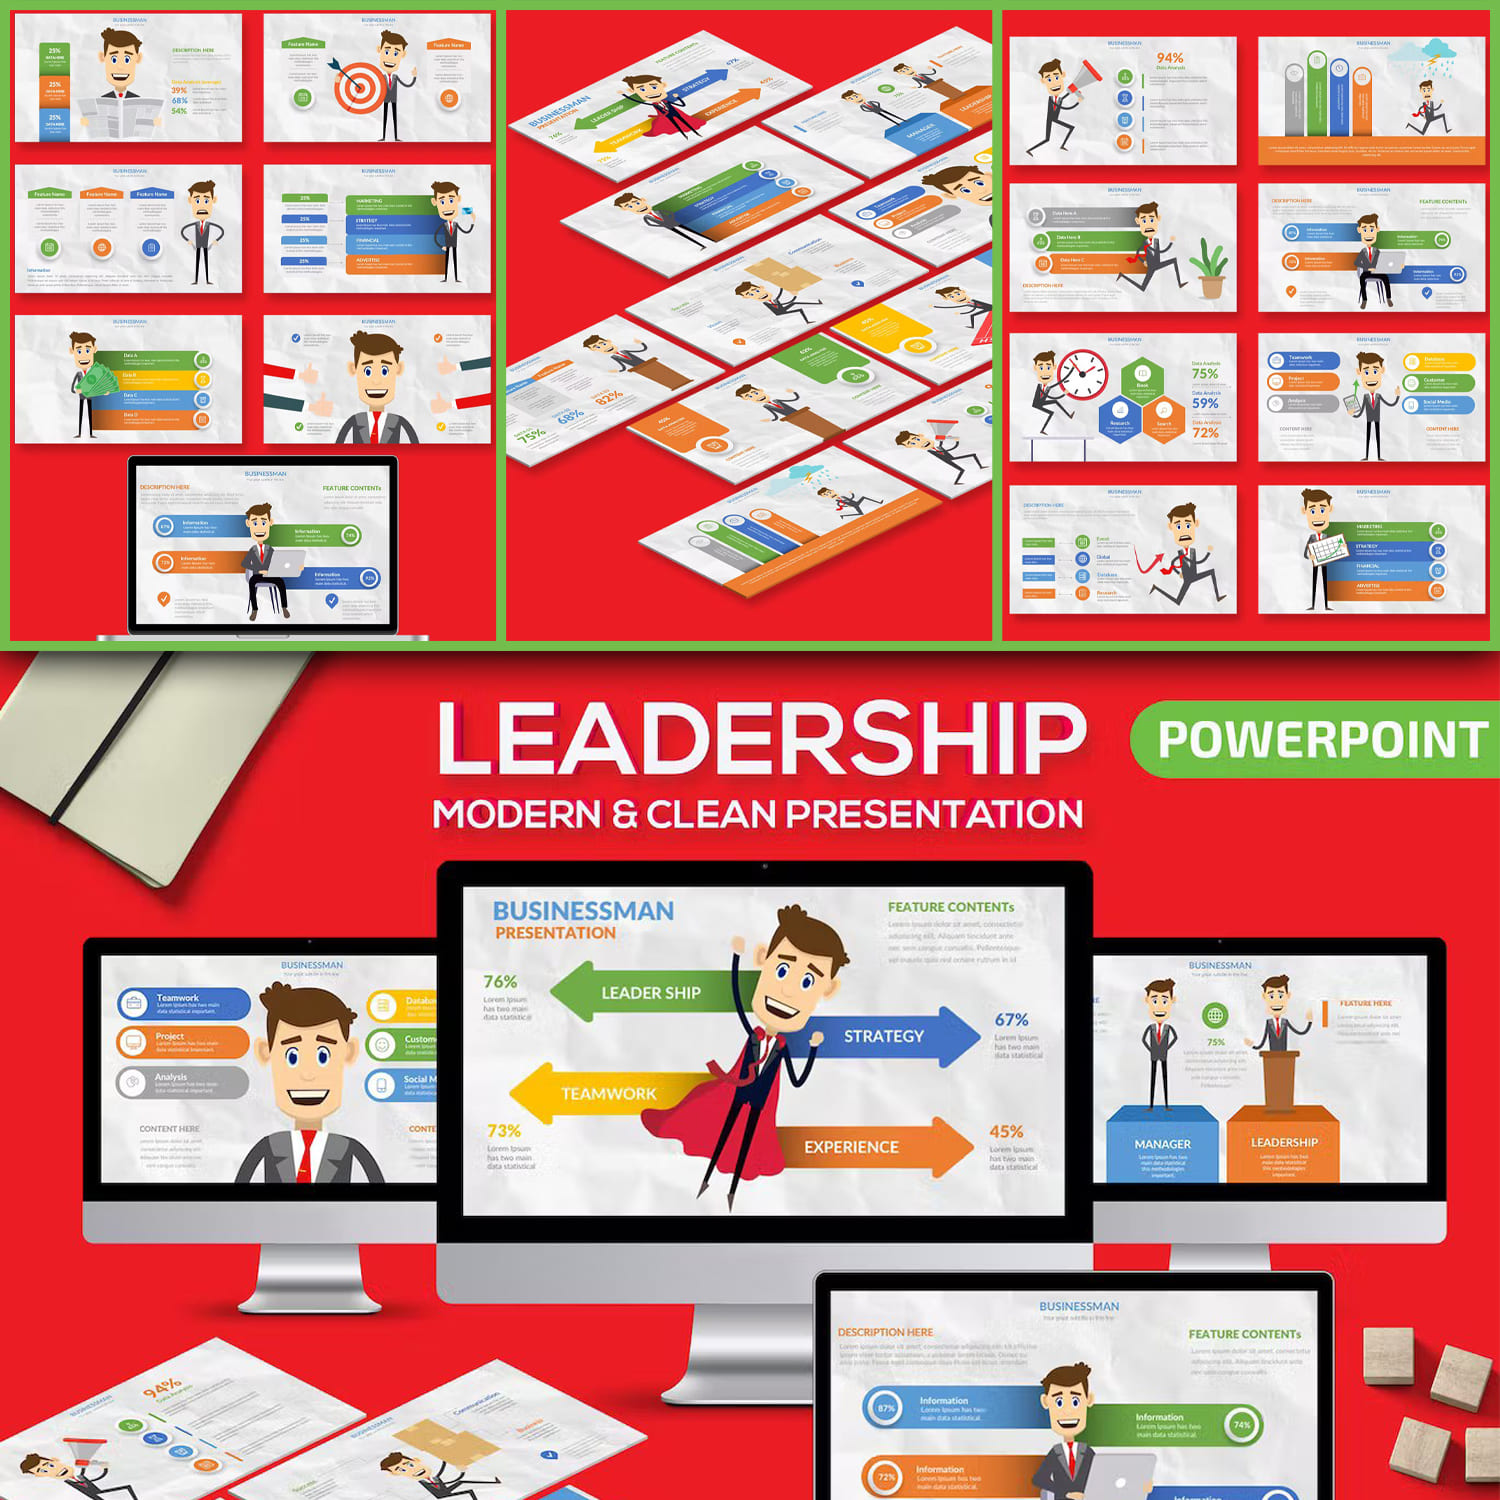 Pack of images of cartoon slide presentation template on leadership theme.